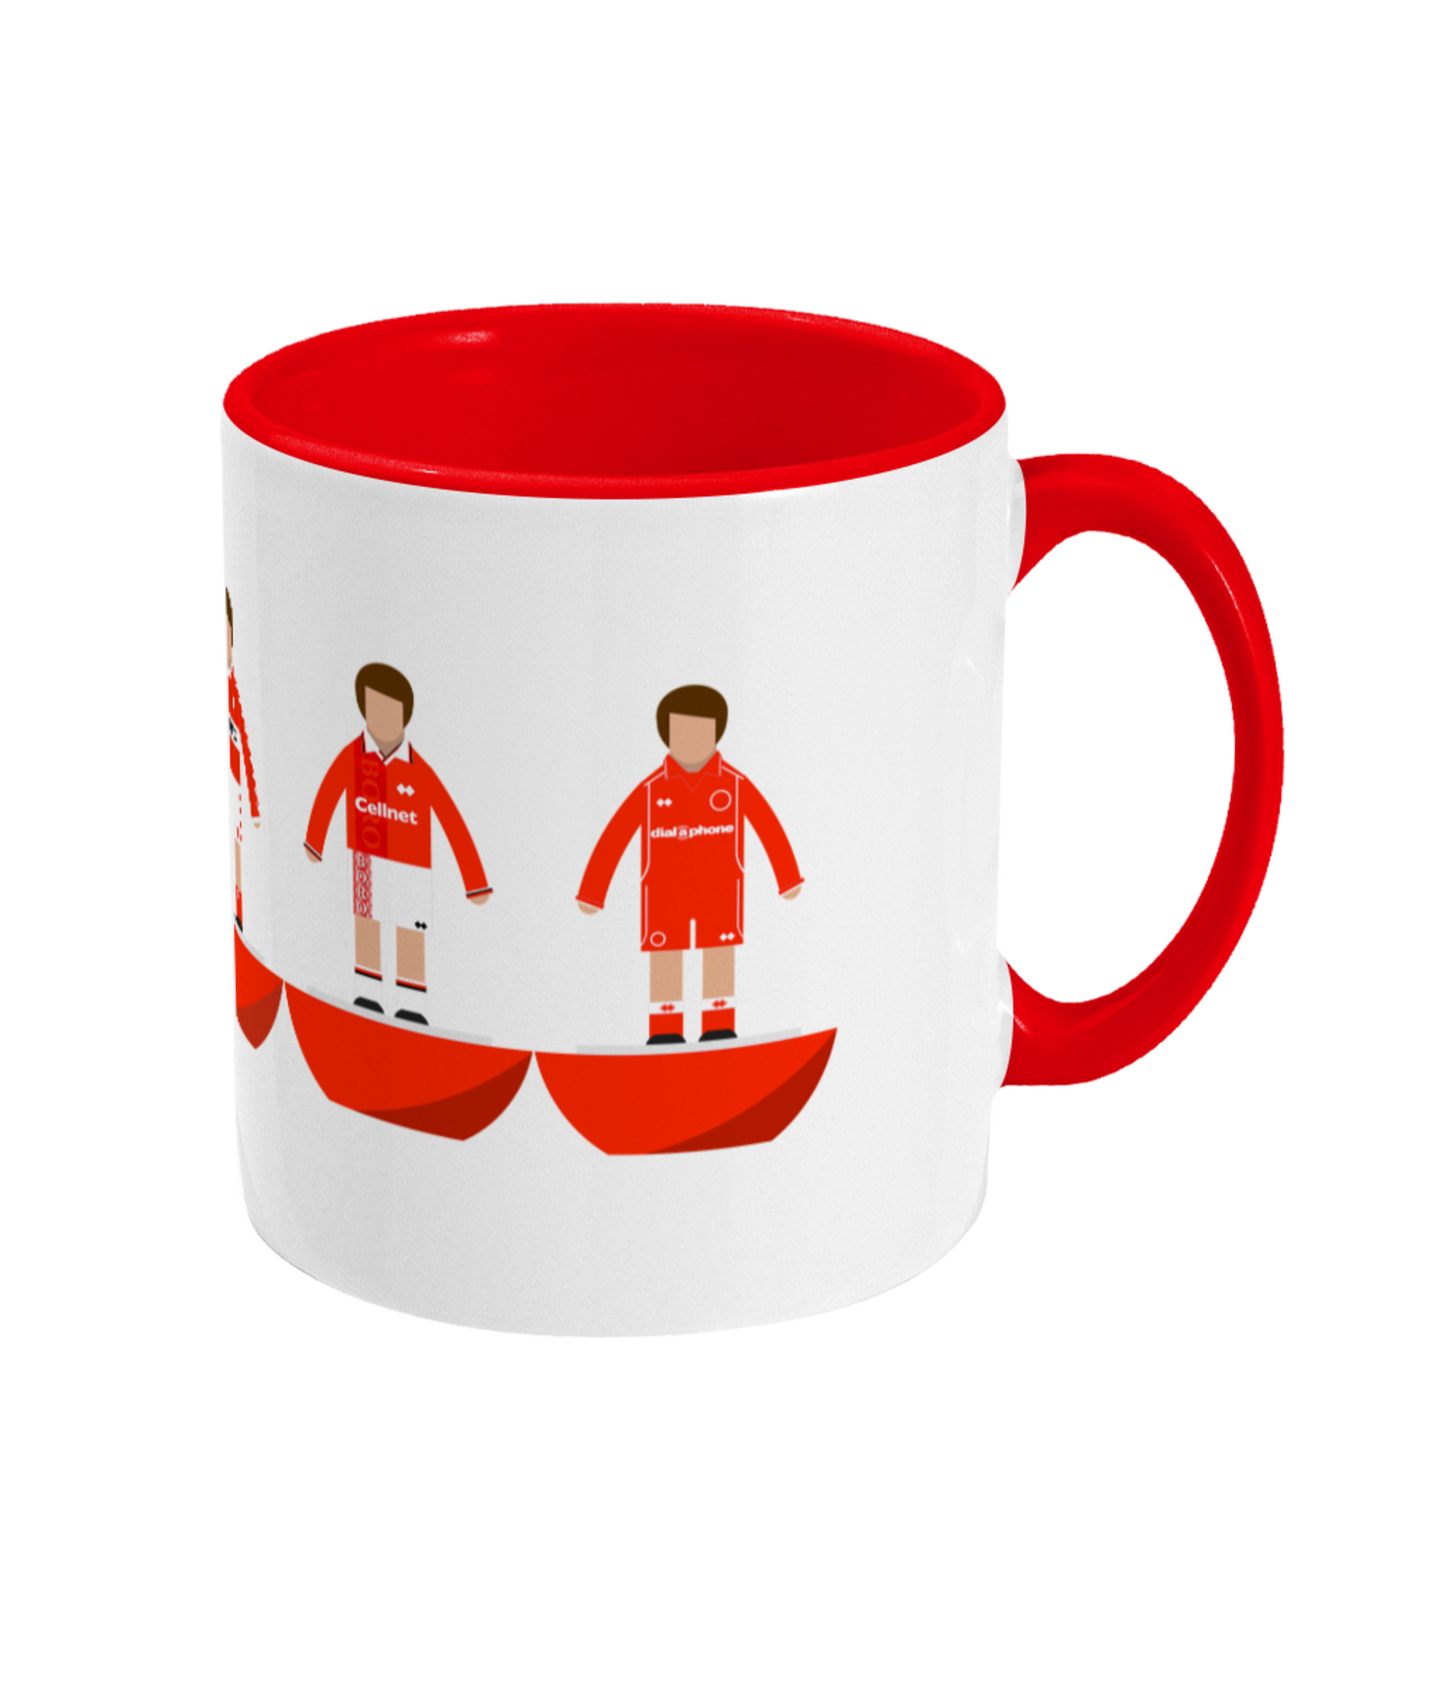 Football Kits 'Middlesbrough combined' Mug